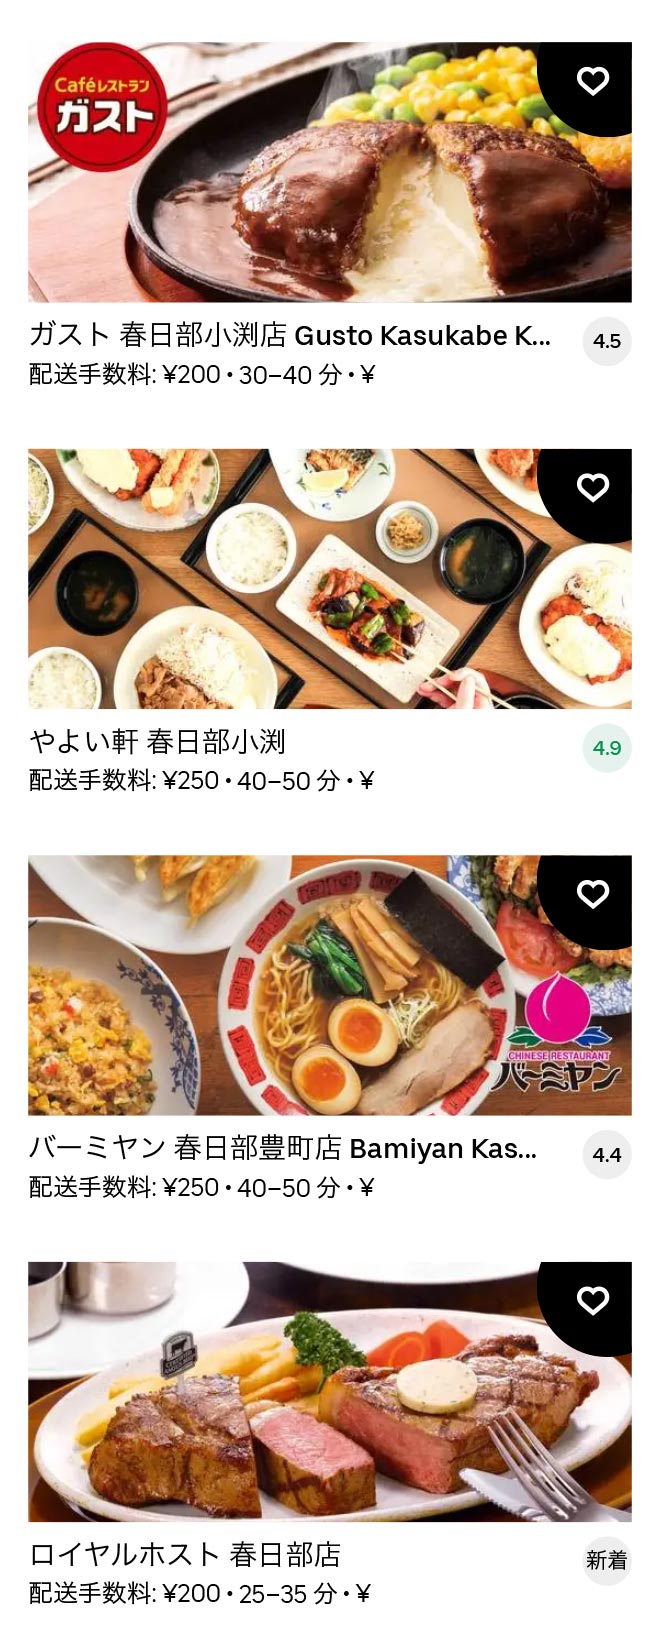 Kasukabe menu 2101 09